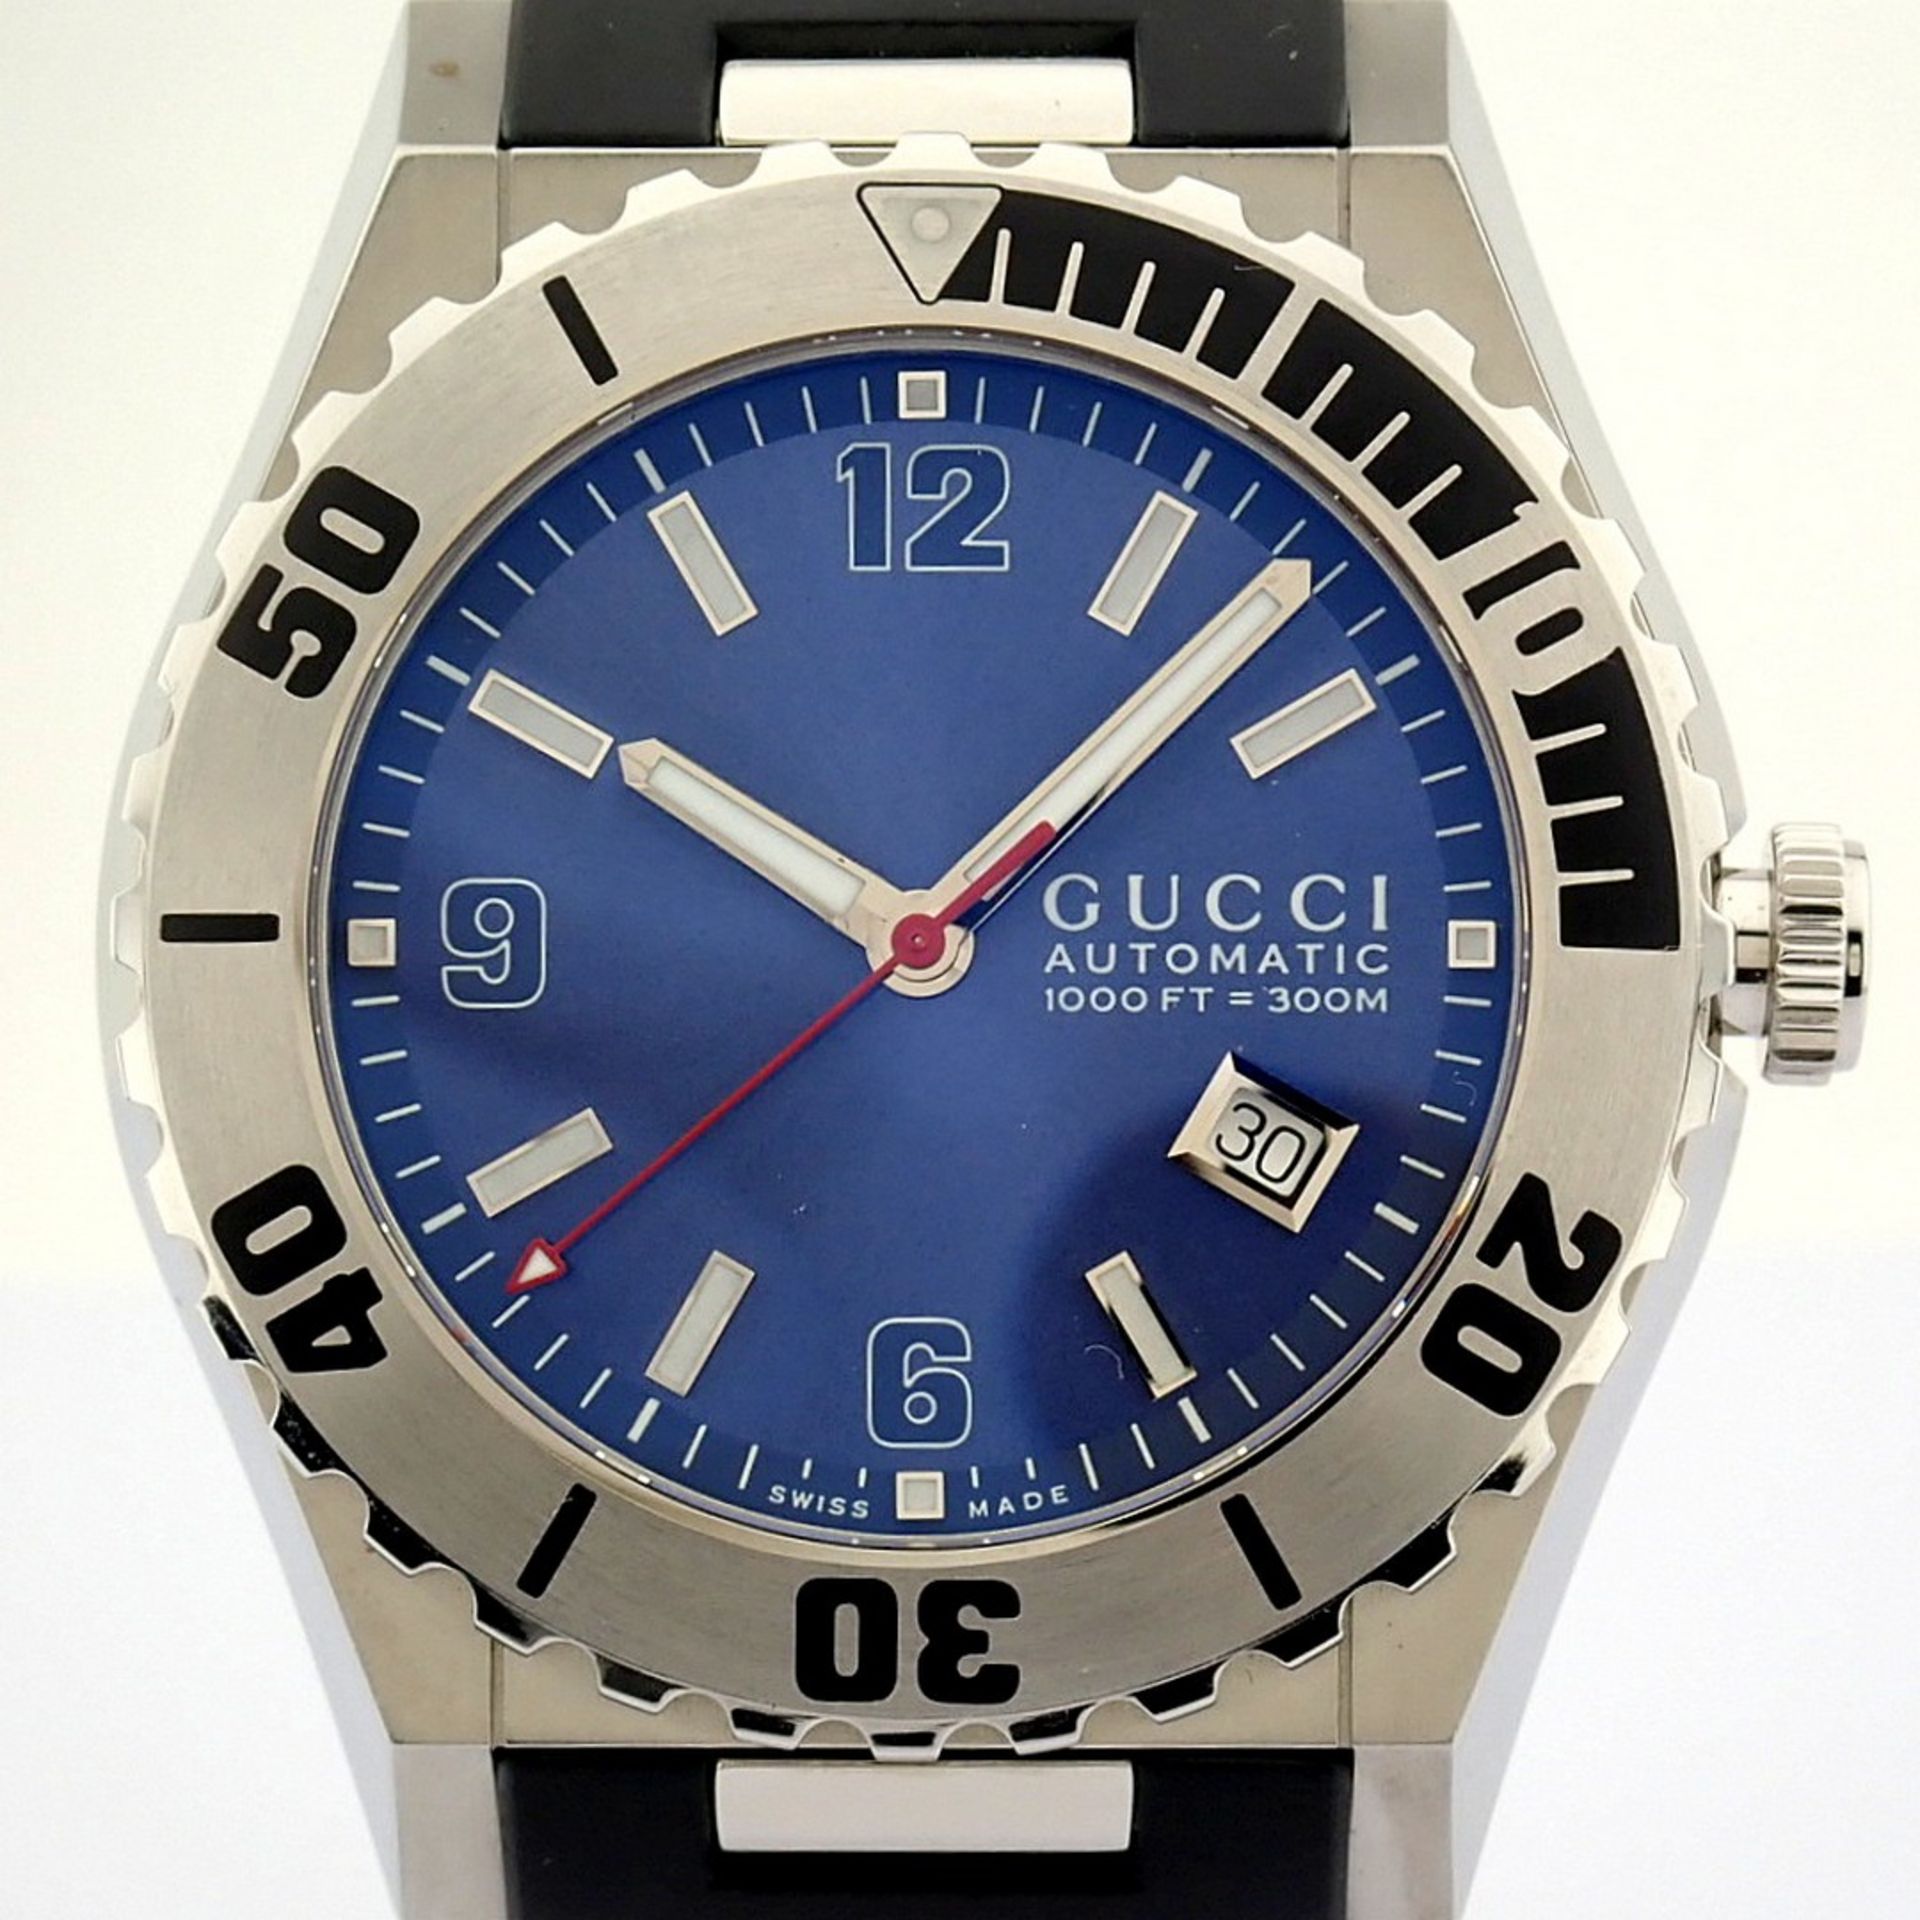 Gucci / Pantheon 115.2 (Brand New) - Gentlmen's Steel Wrist Watch - Image 5 of 13